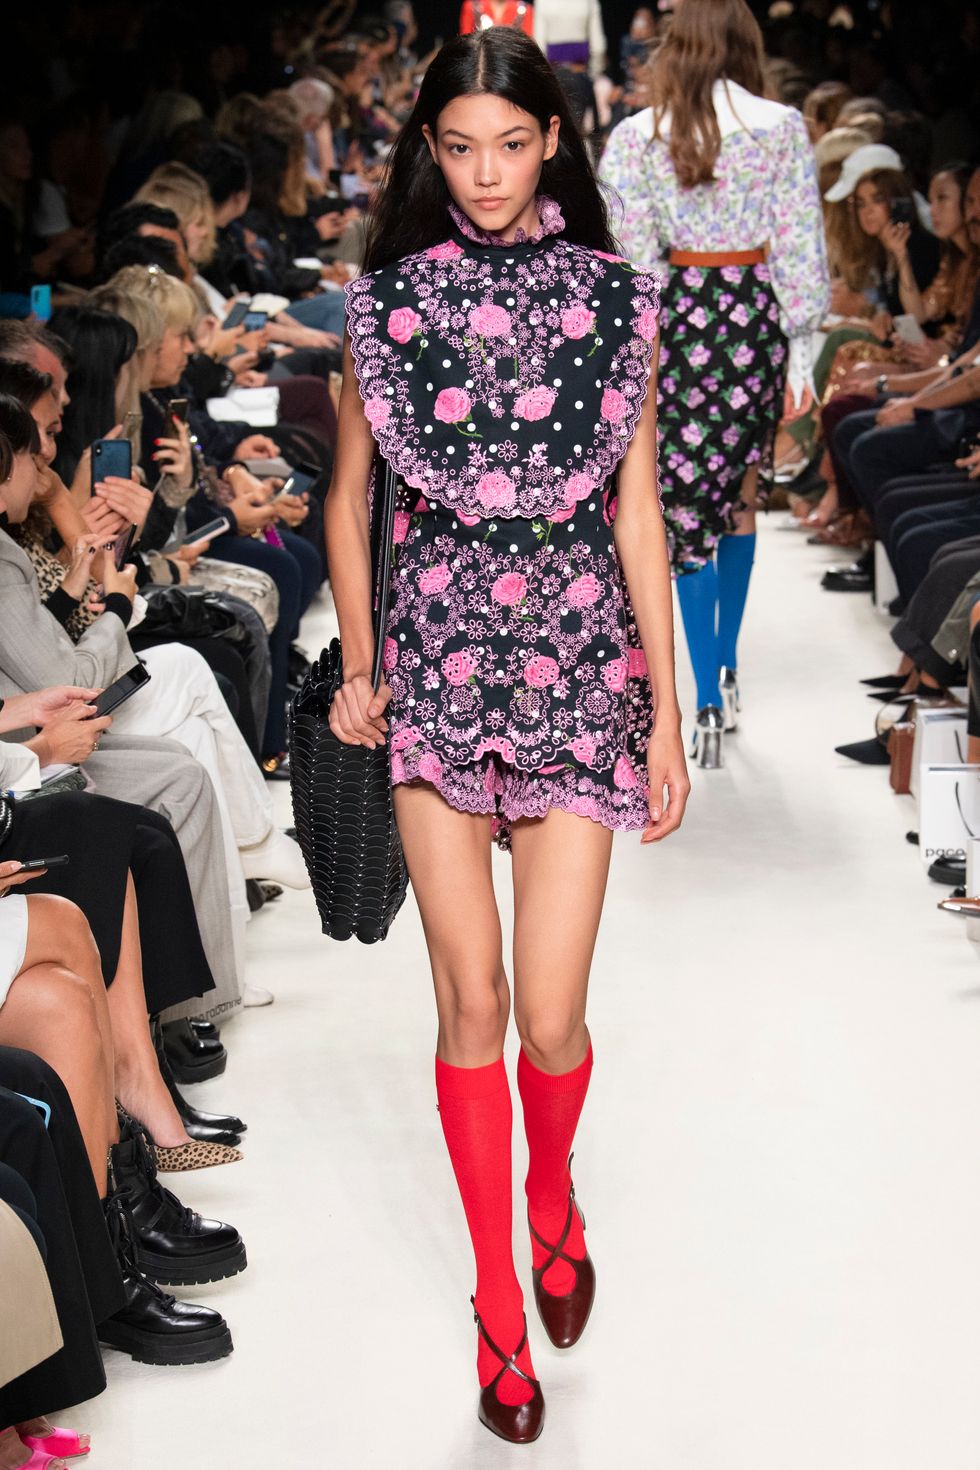 Paco Rabanne Introduced Menswear at Paris Fashion Week - PAPER